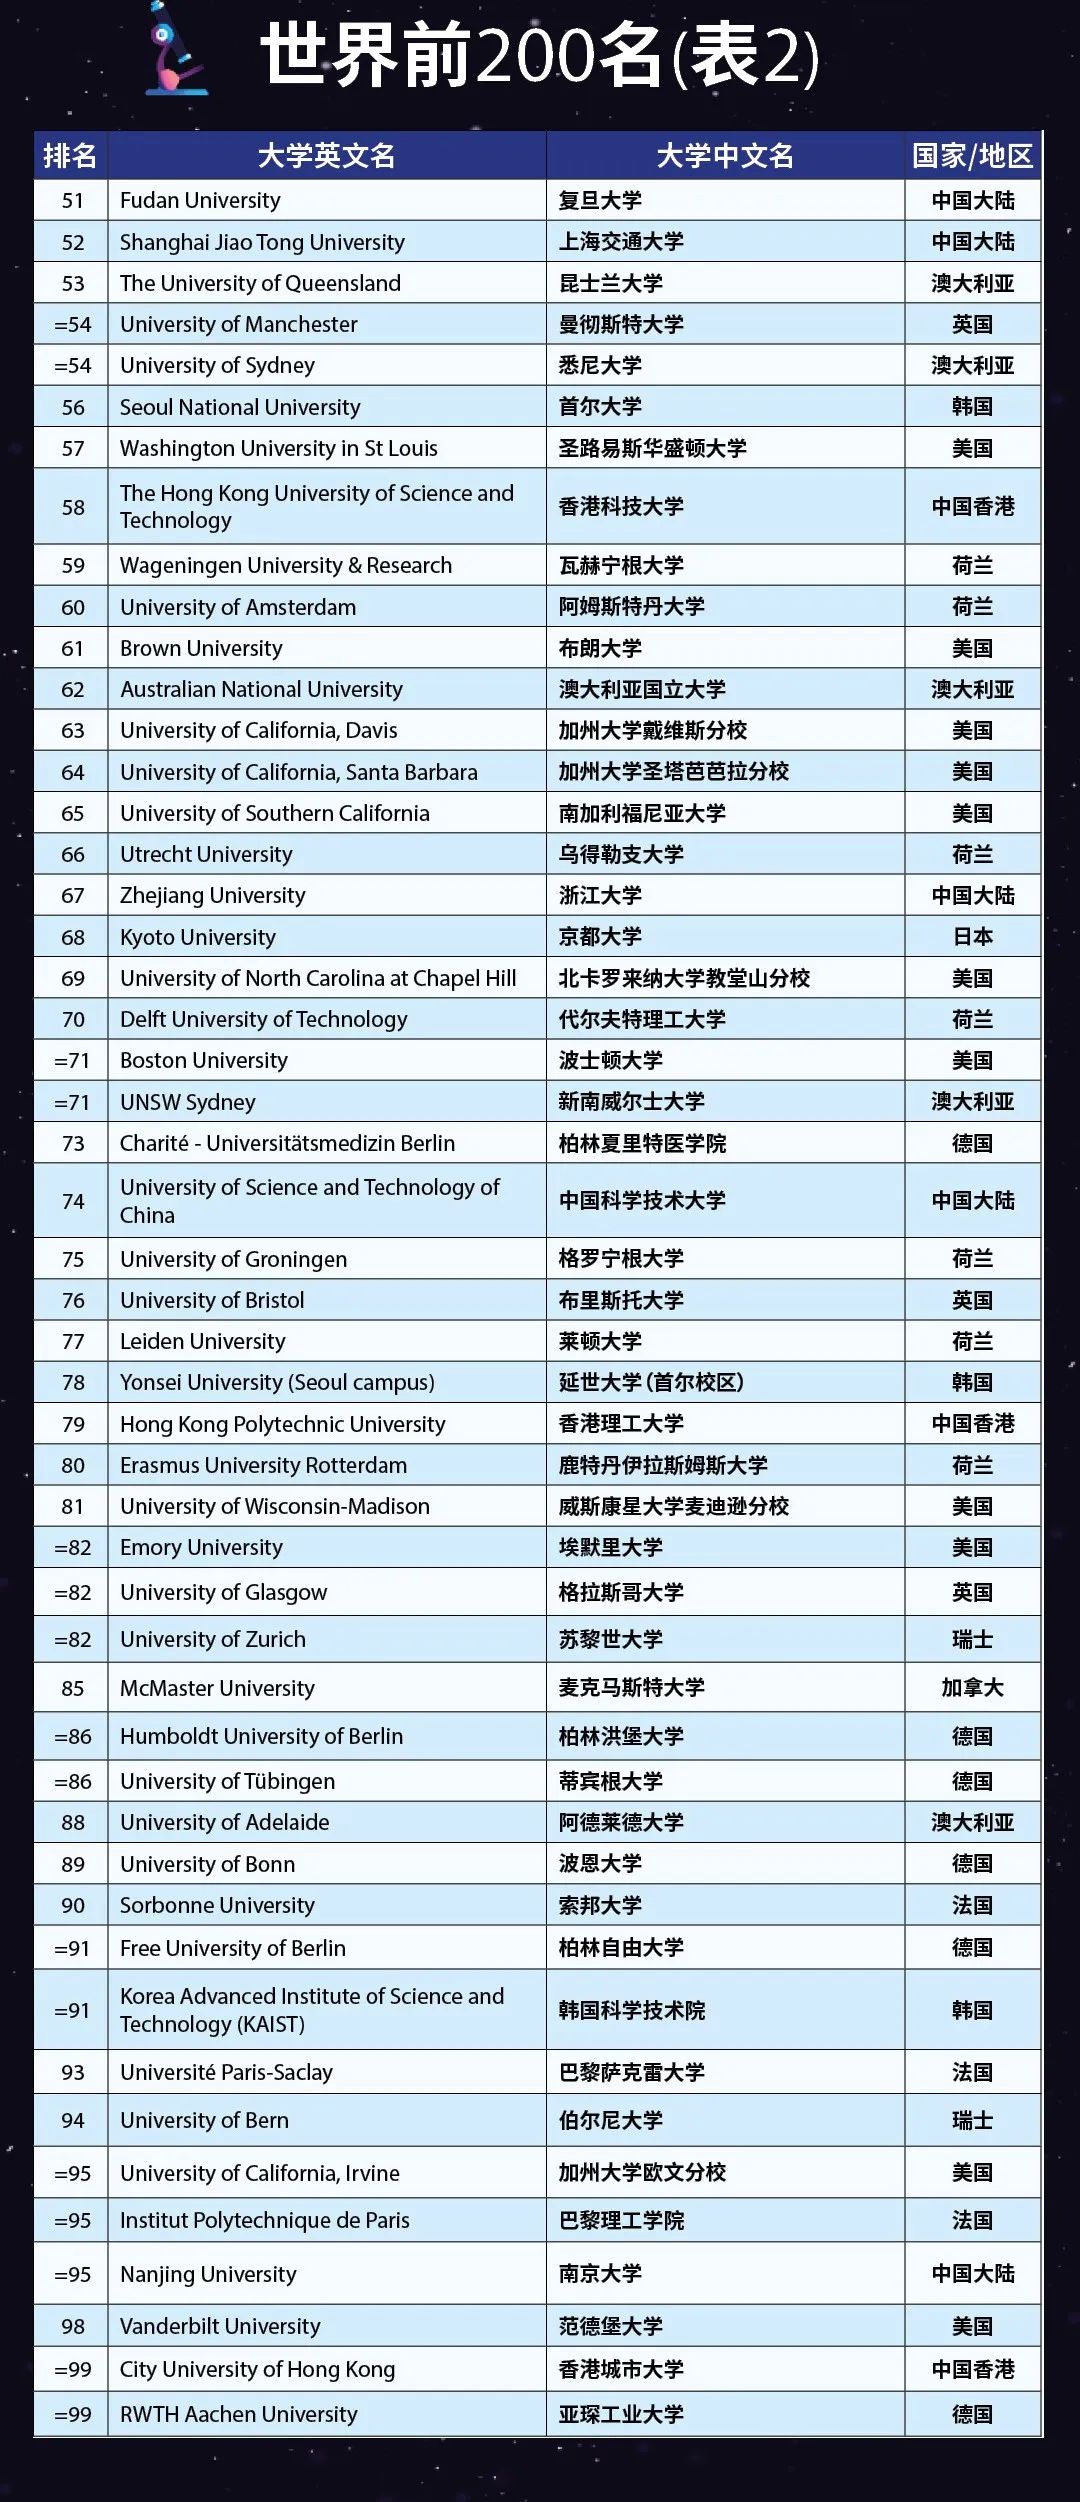 2023THE泰晤士高等教育世界大学排名发布！